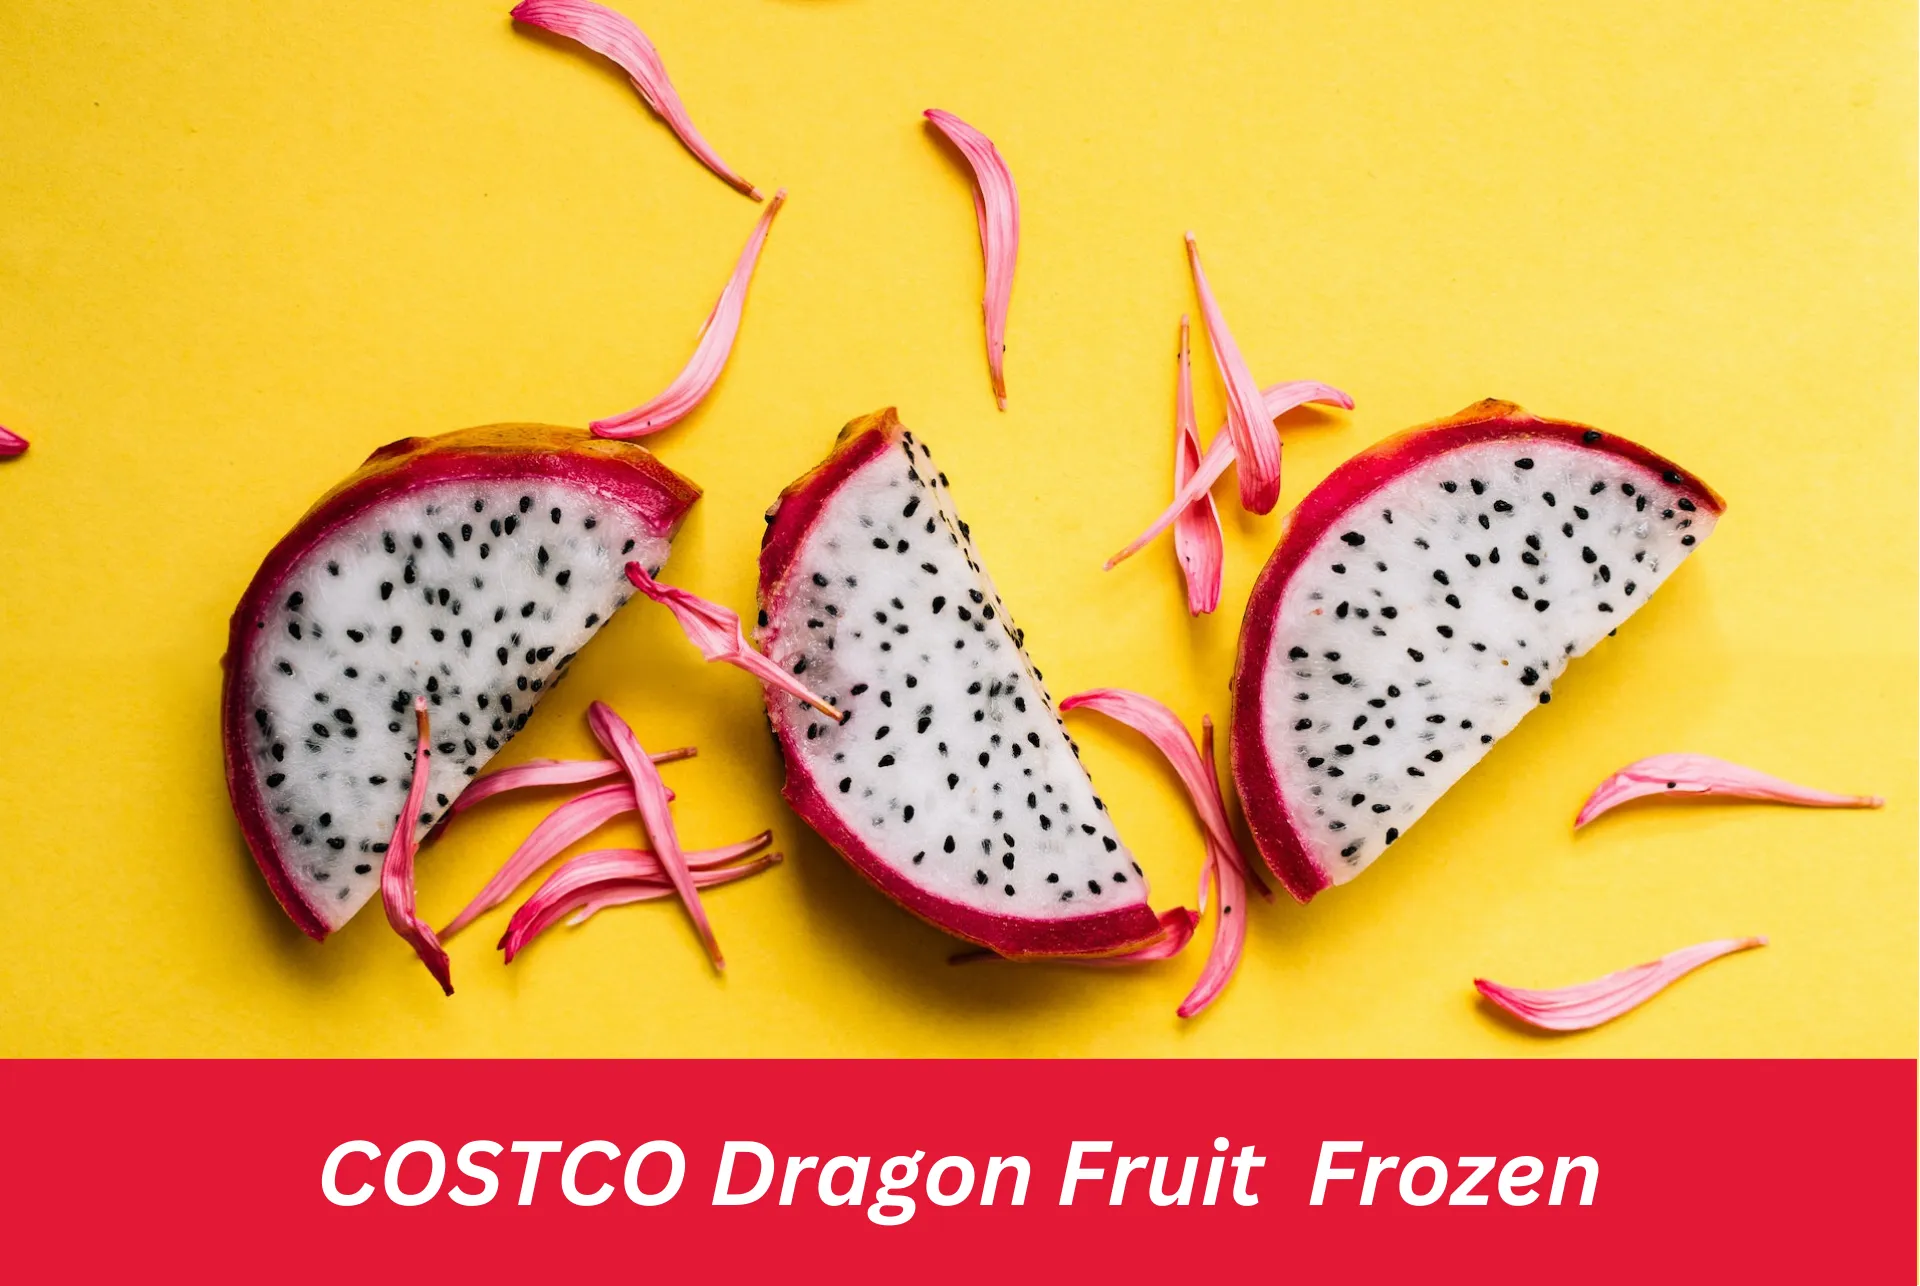 Costco Dragon Fruit